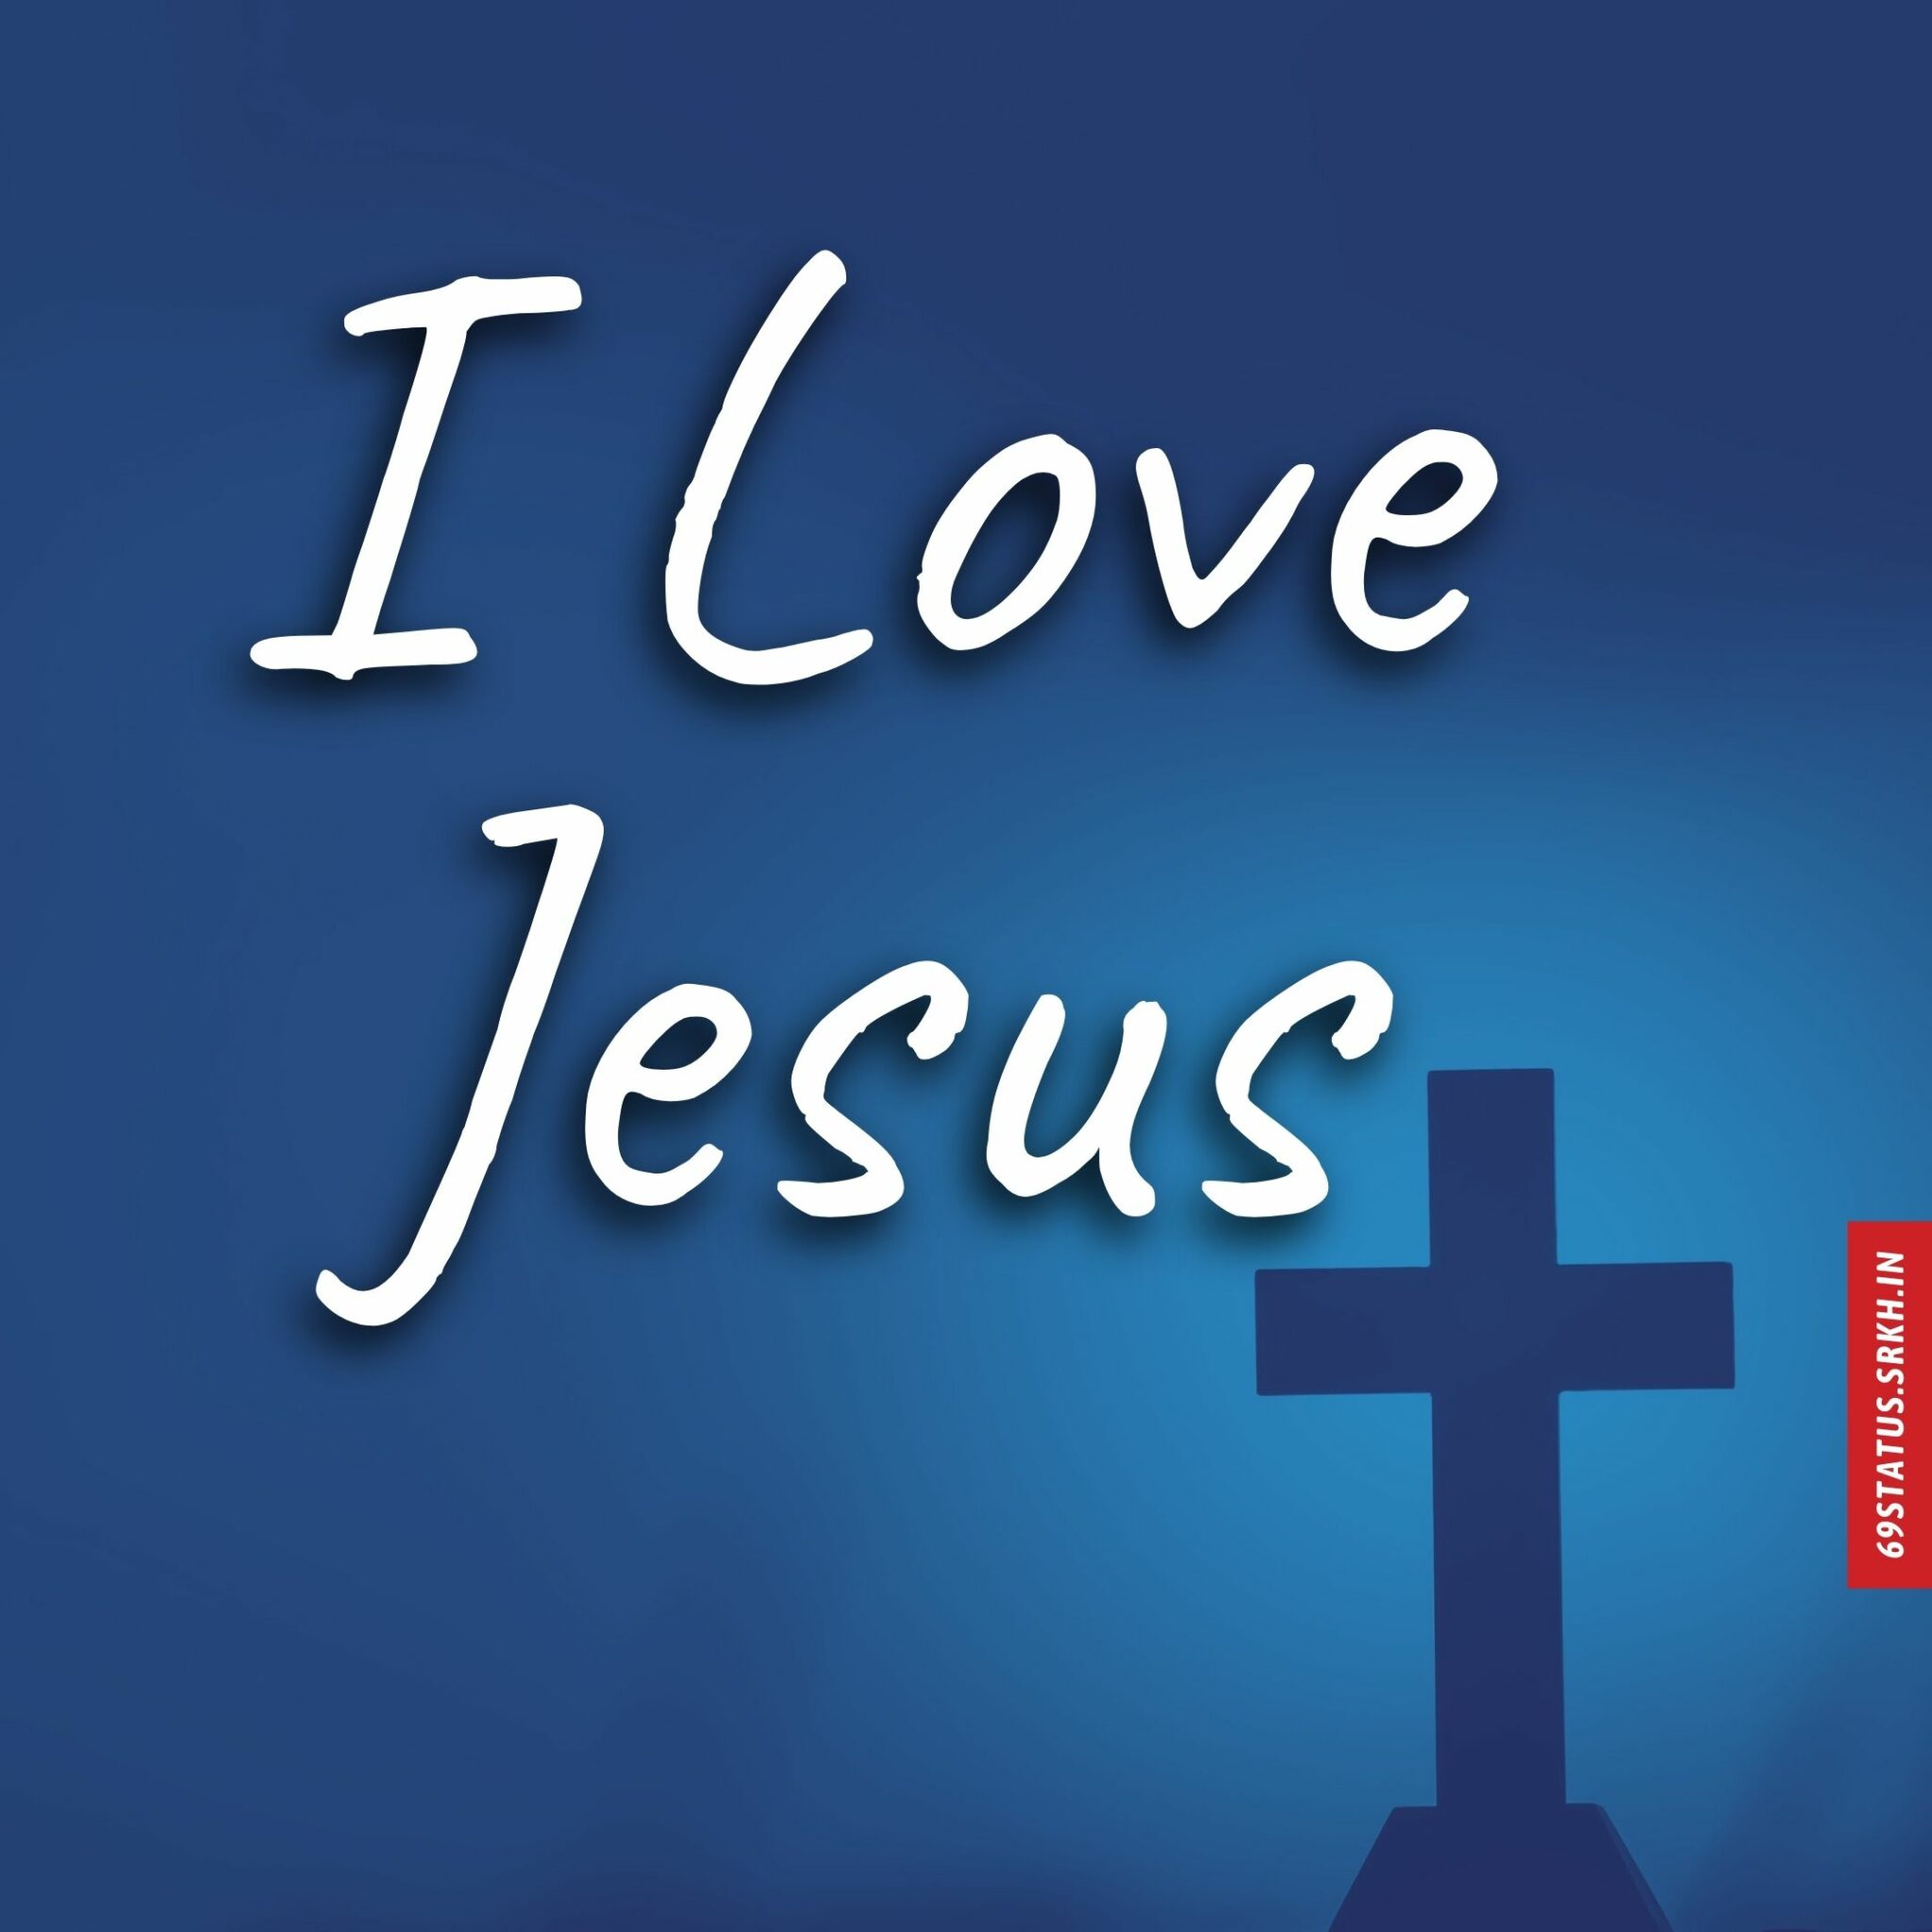 I Love You jesus images